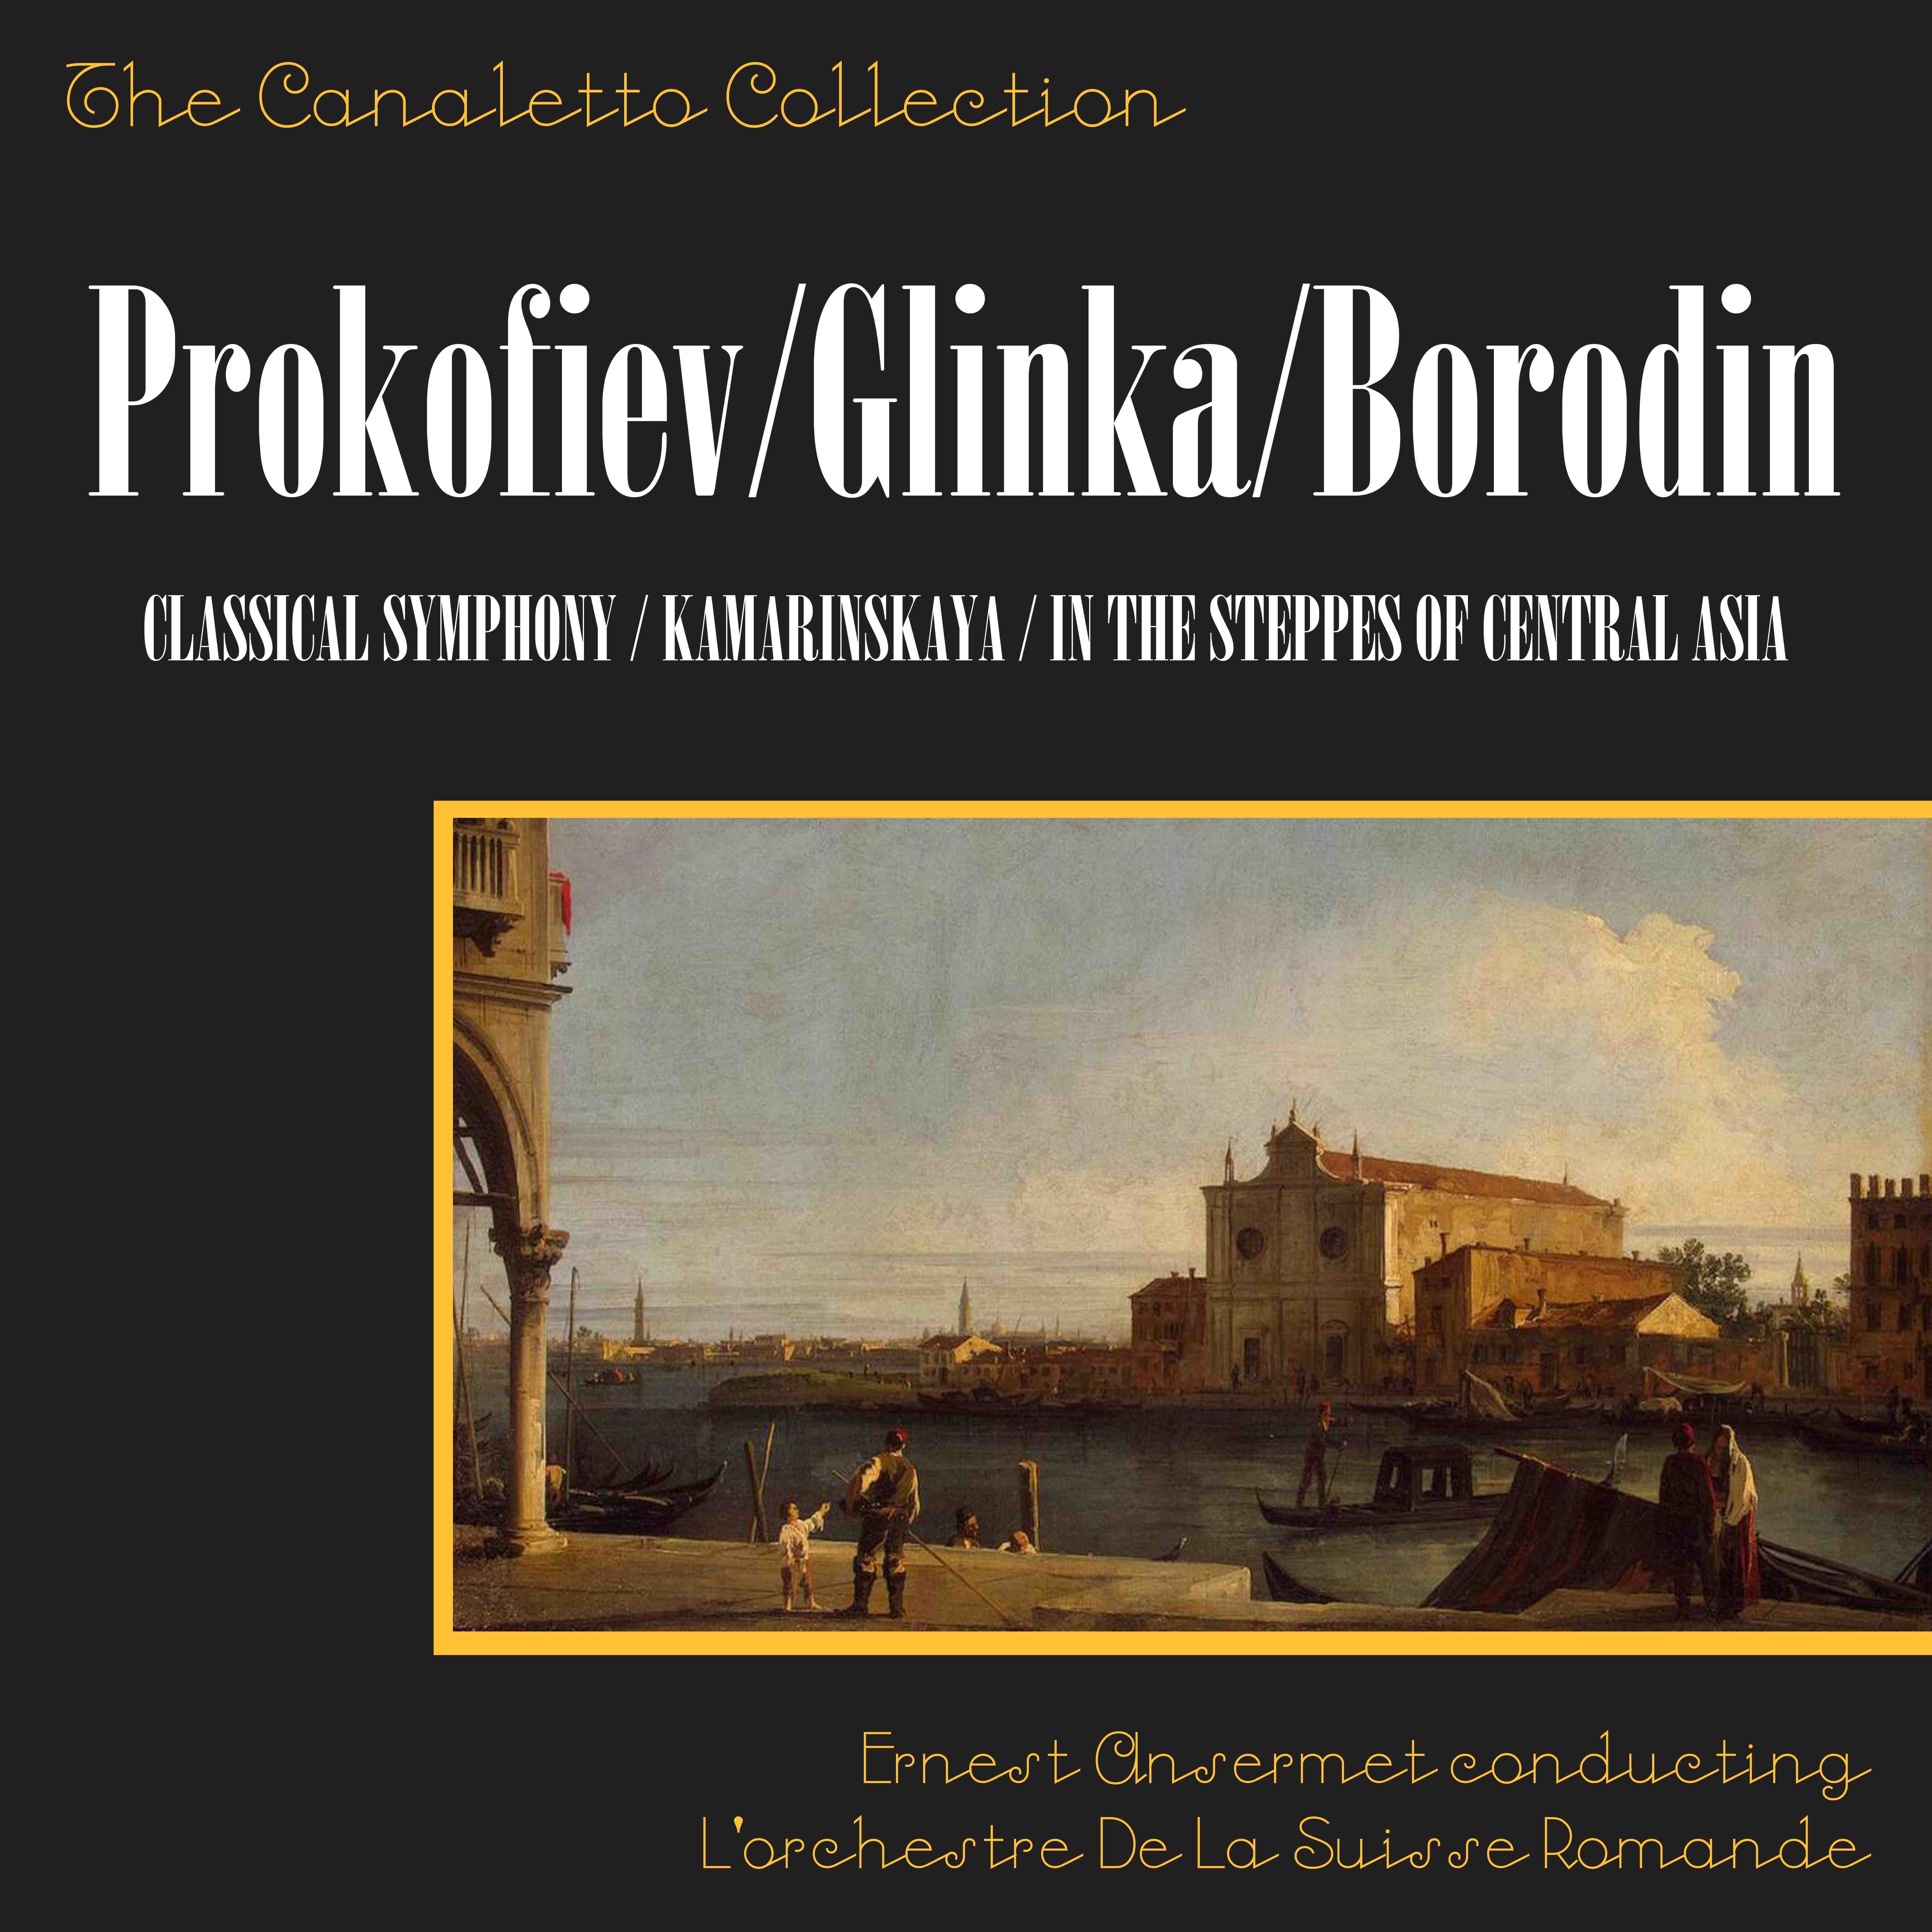 Prokofiev: "Classical" Symphony In D Major, Op. 25: 4. Finale - Molto Vivace